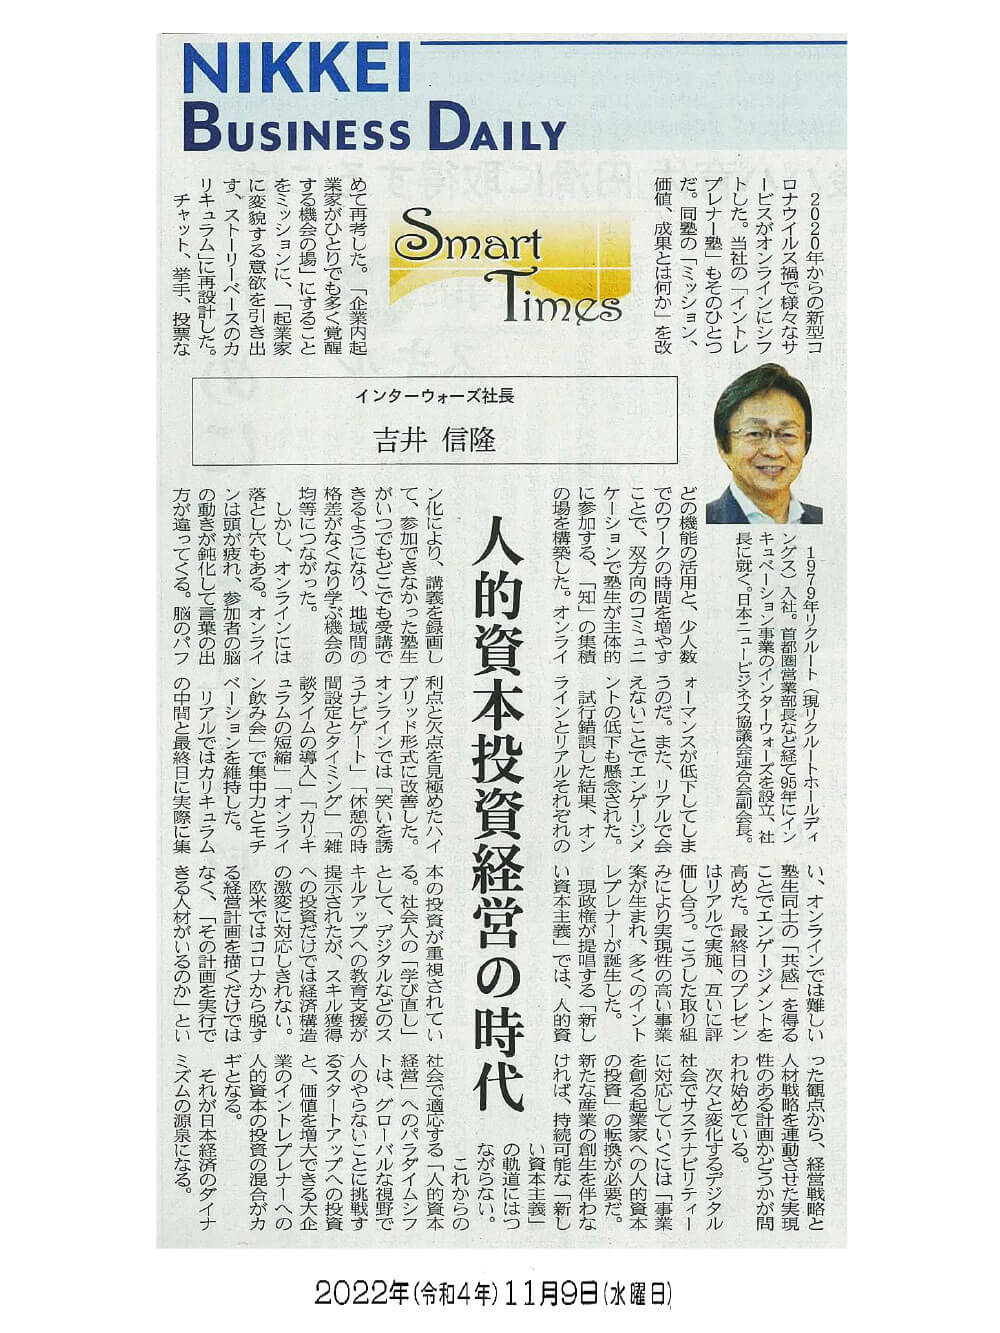 日経産業新聞 Smart Times「人的資本投資経営の時代」